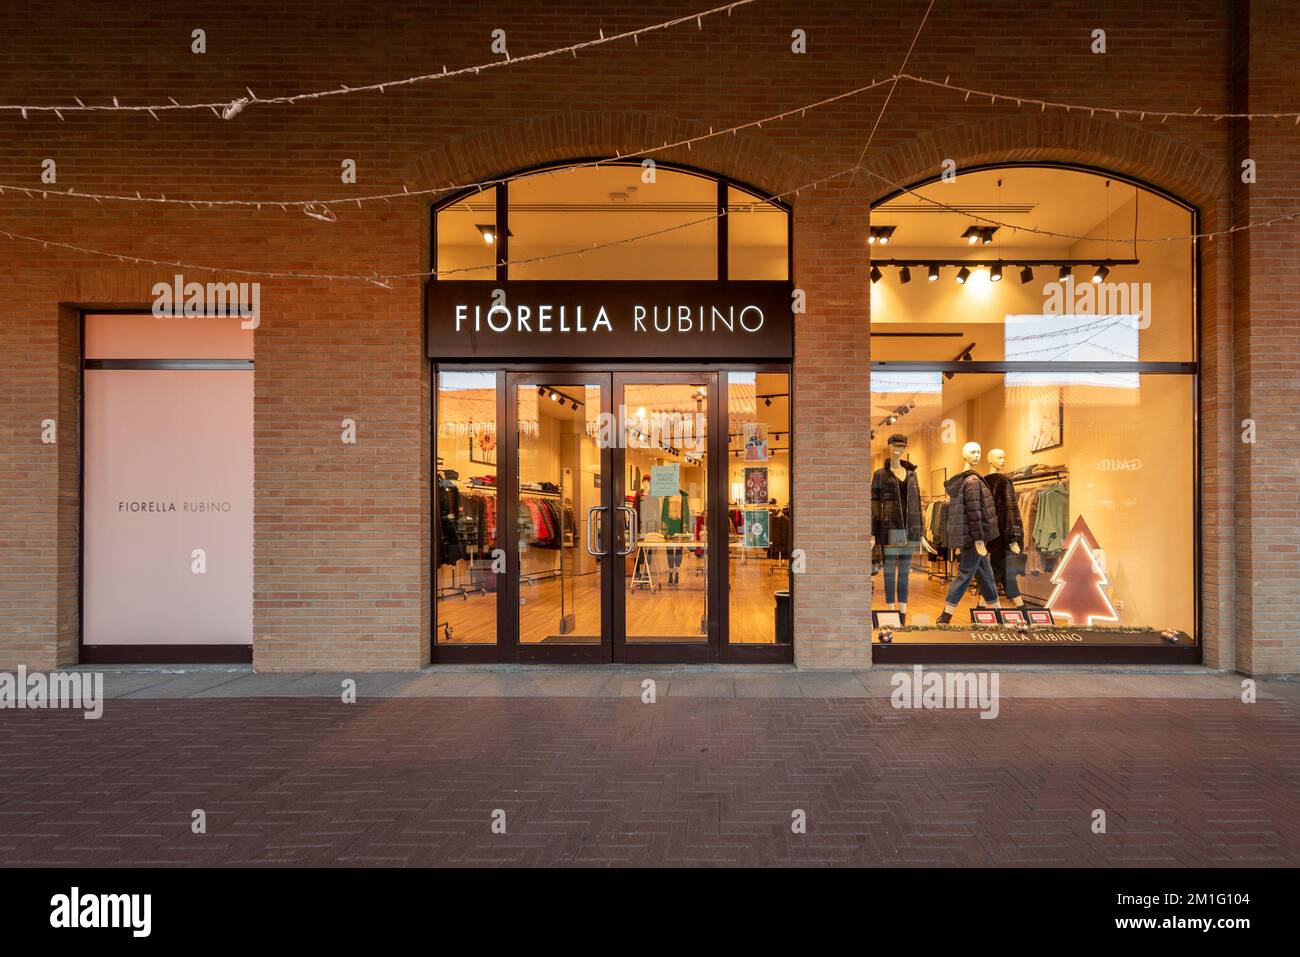 Fiorella rubino hi-res stock photography and images - Alamy